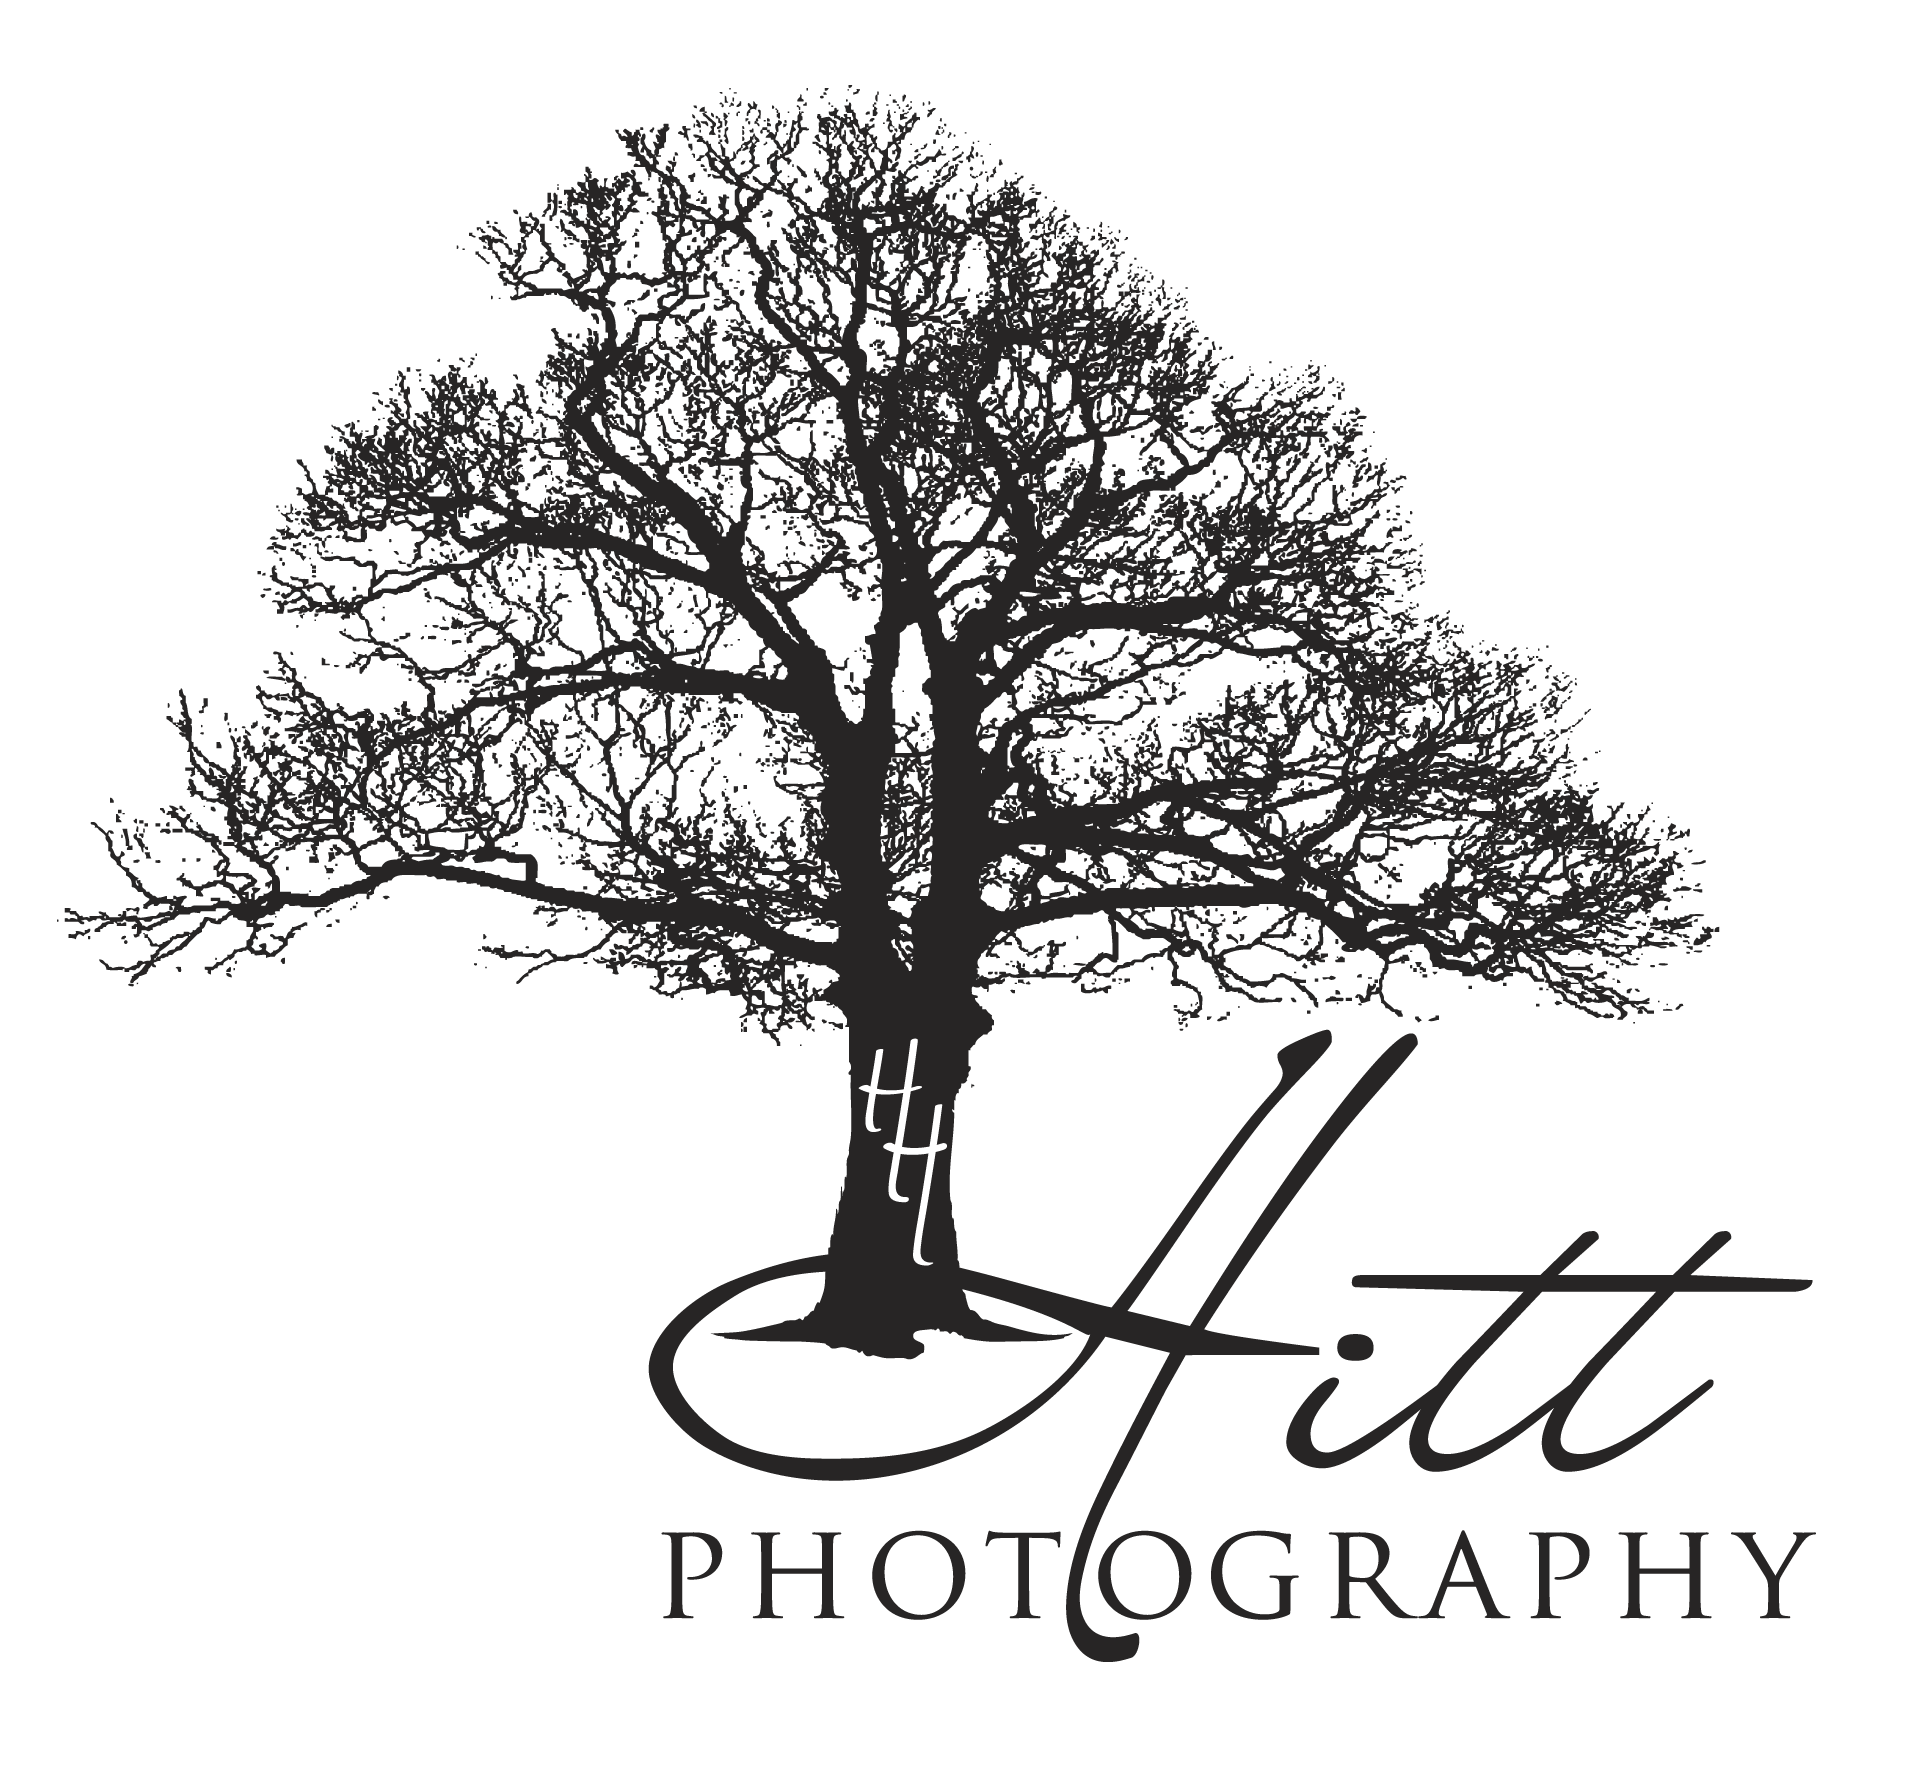 Hitt Photography